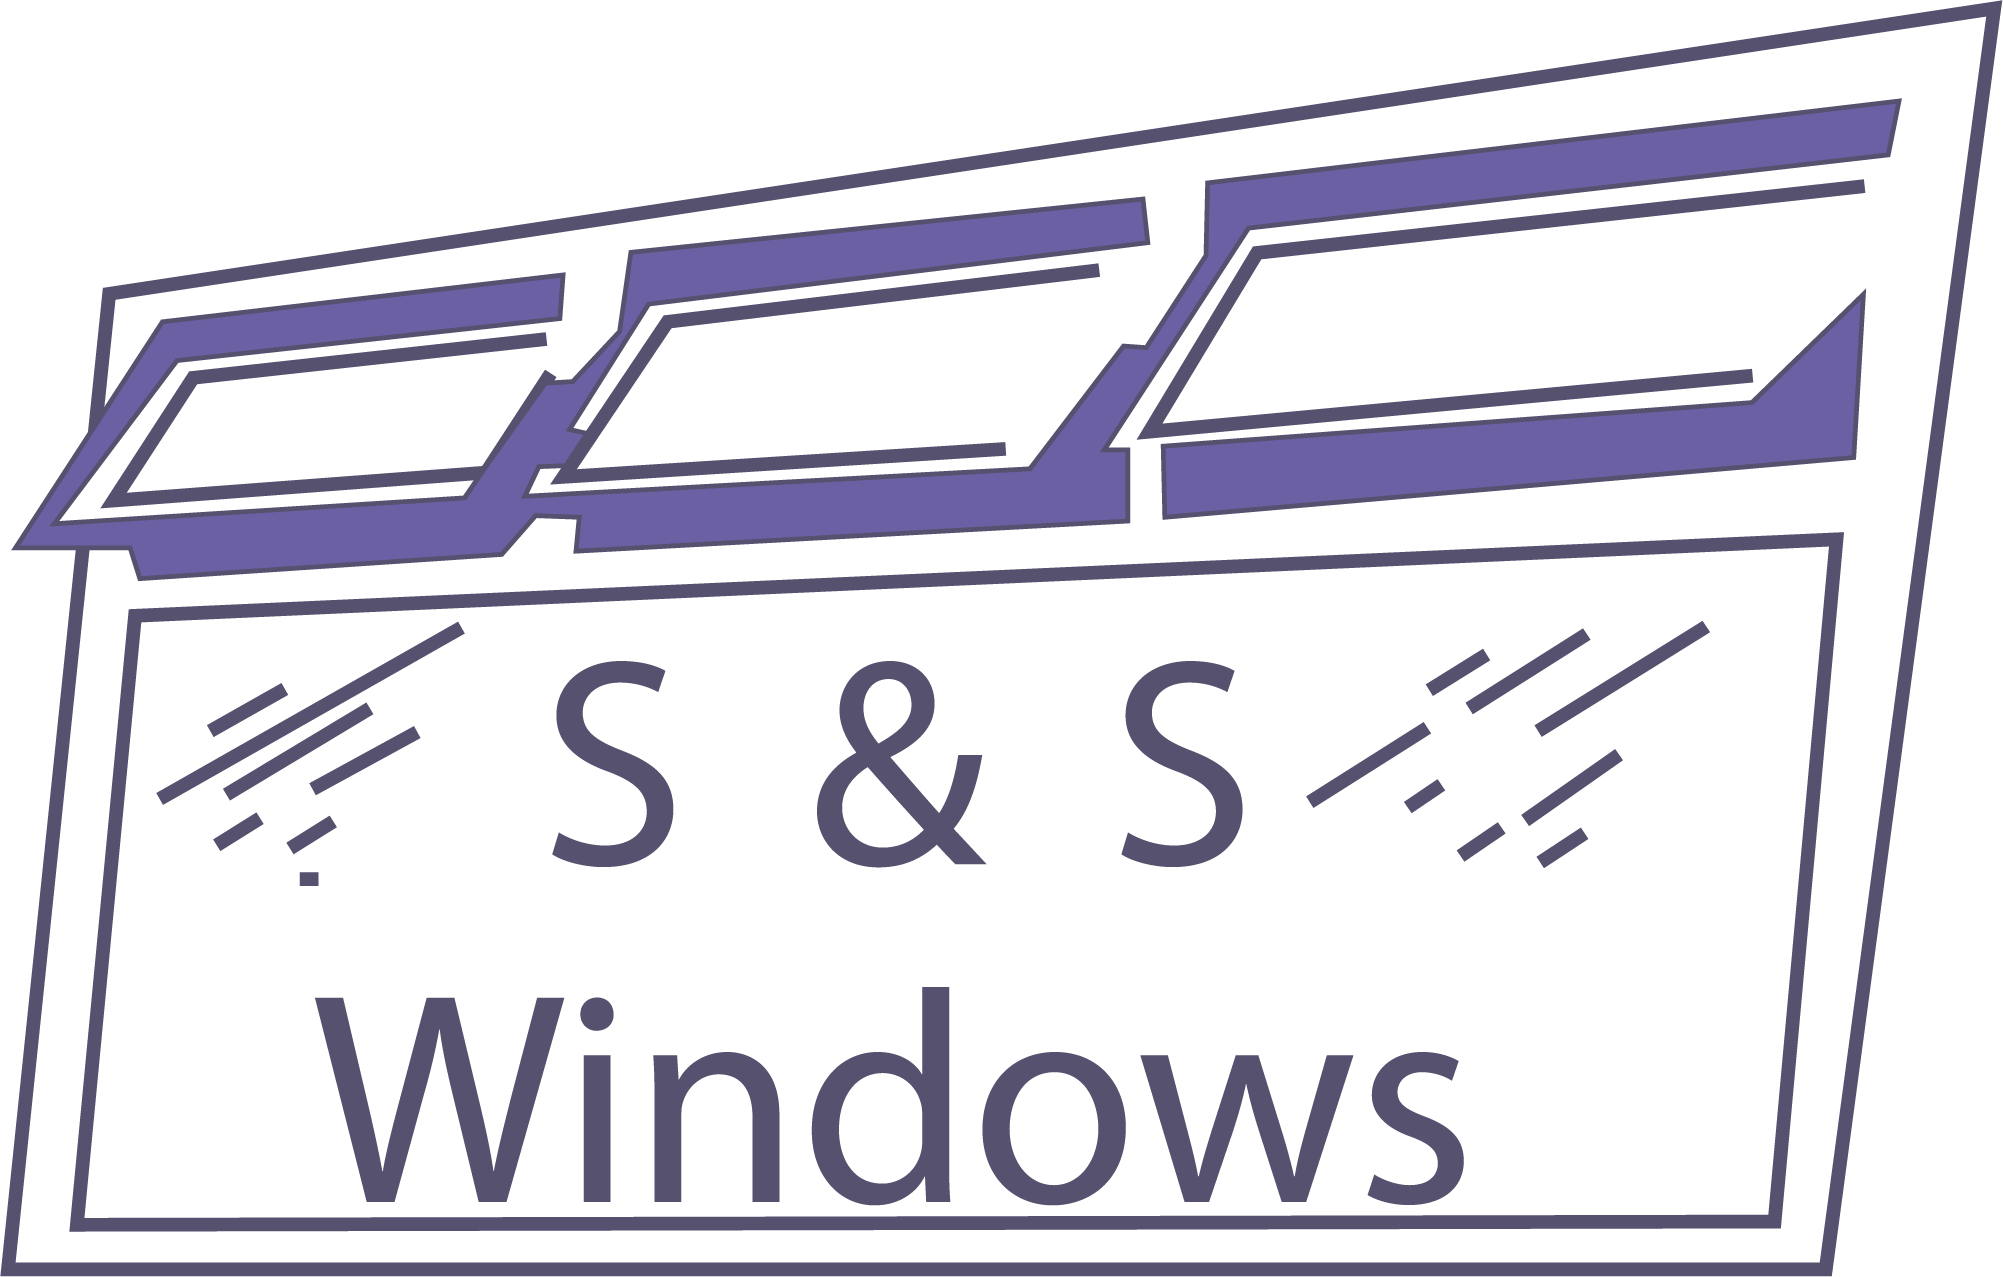 S&S Windows